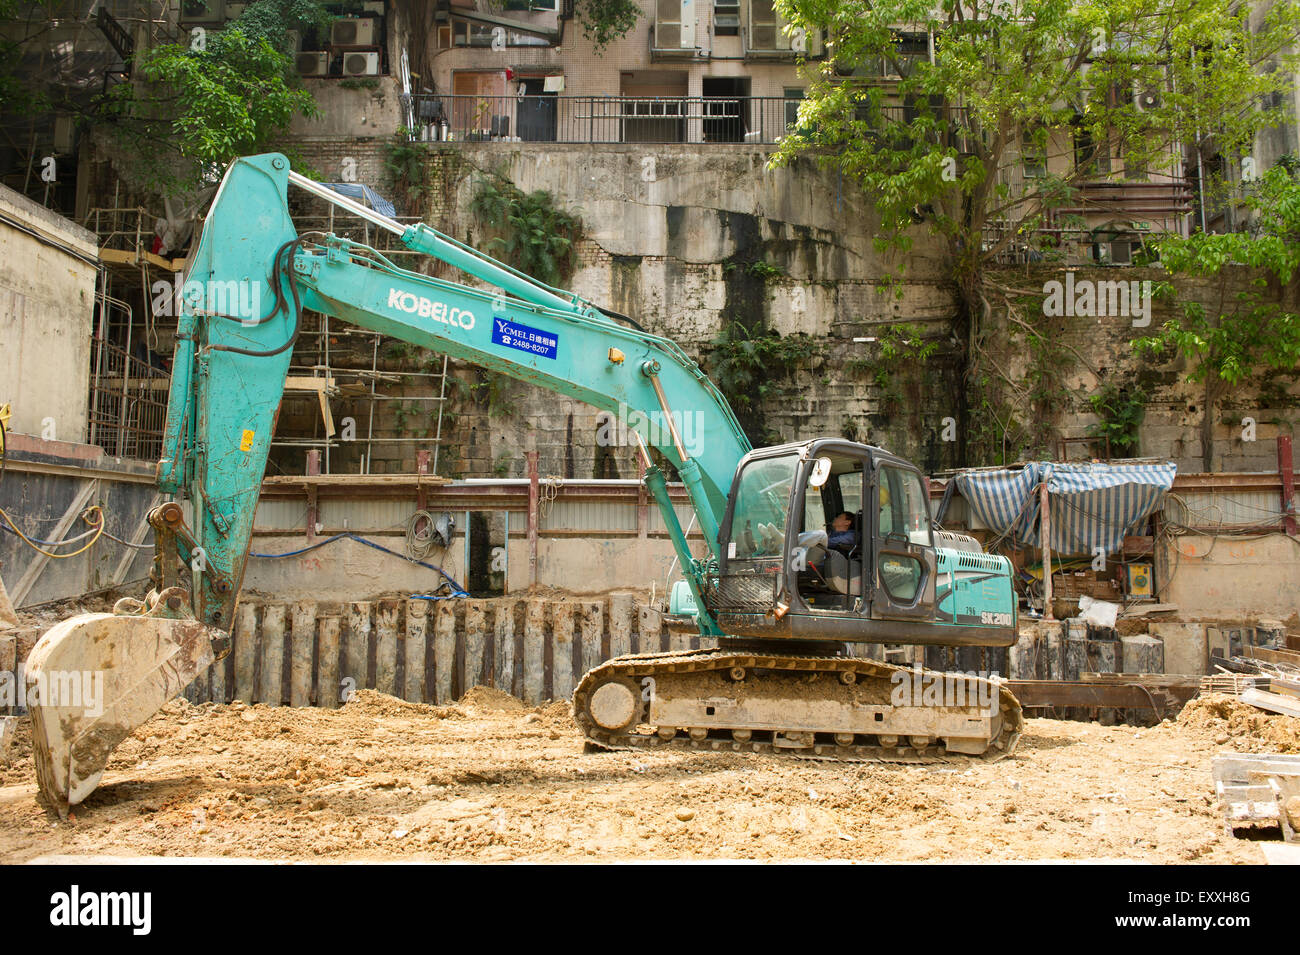 Excavator at a standstill while operator naps, Hong Kong China Stock Photo